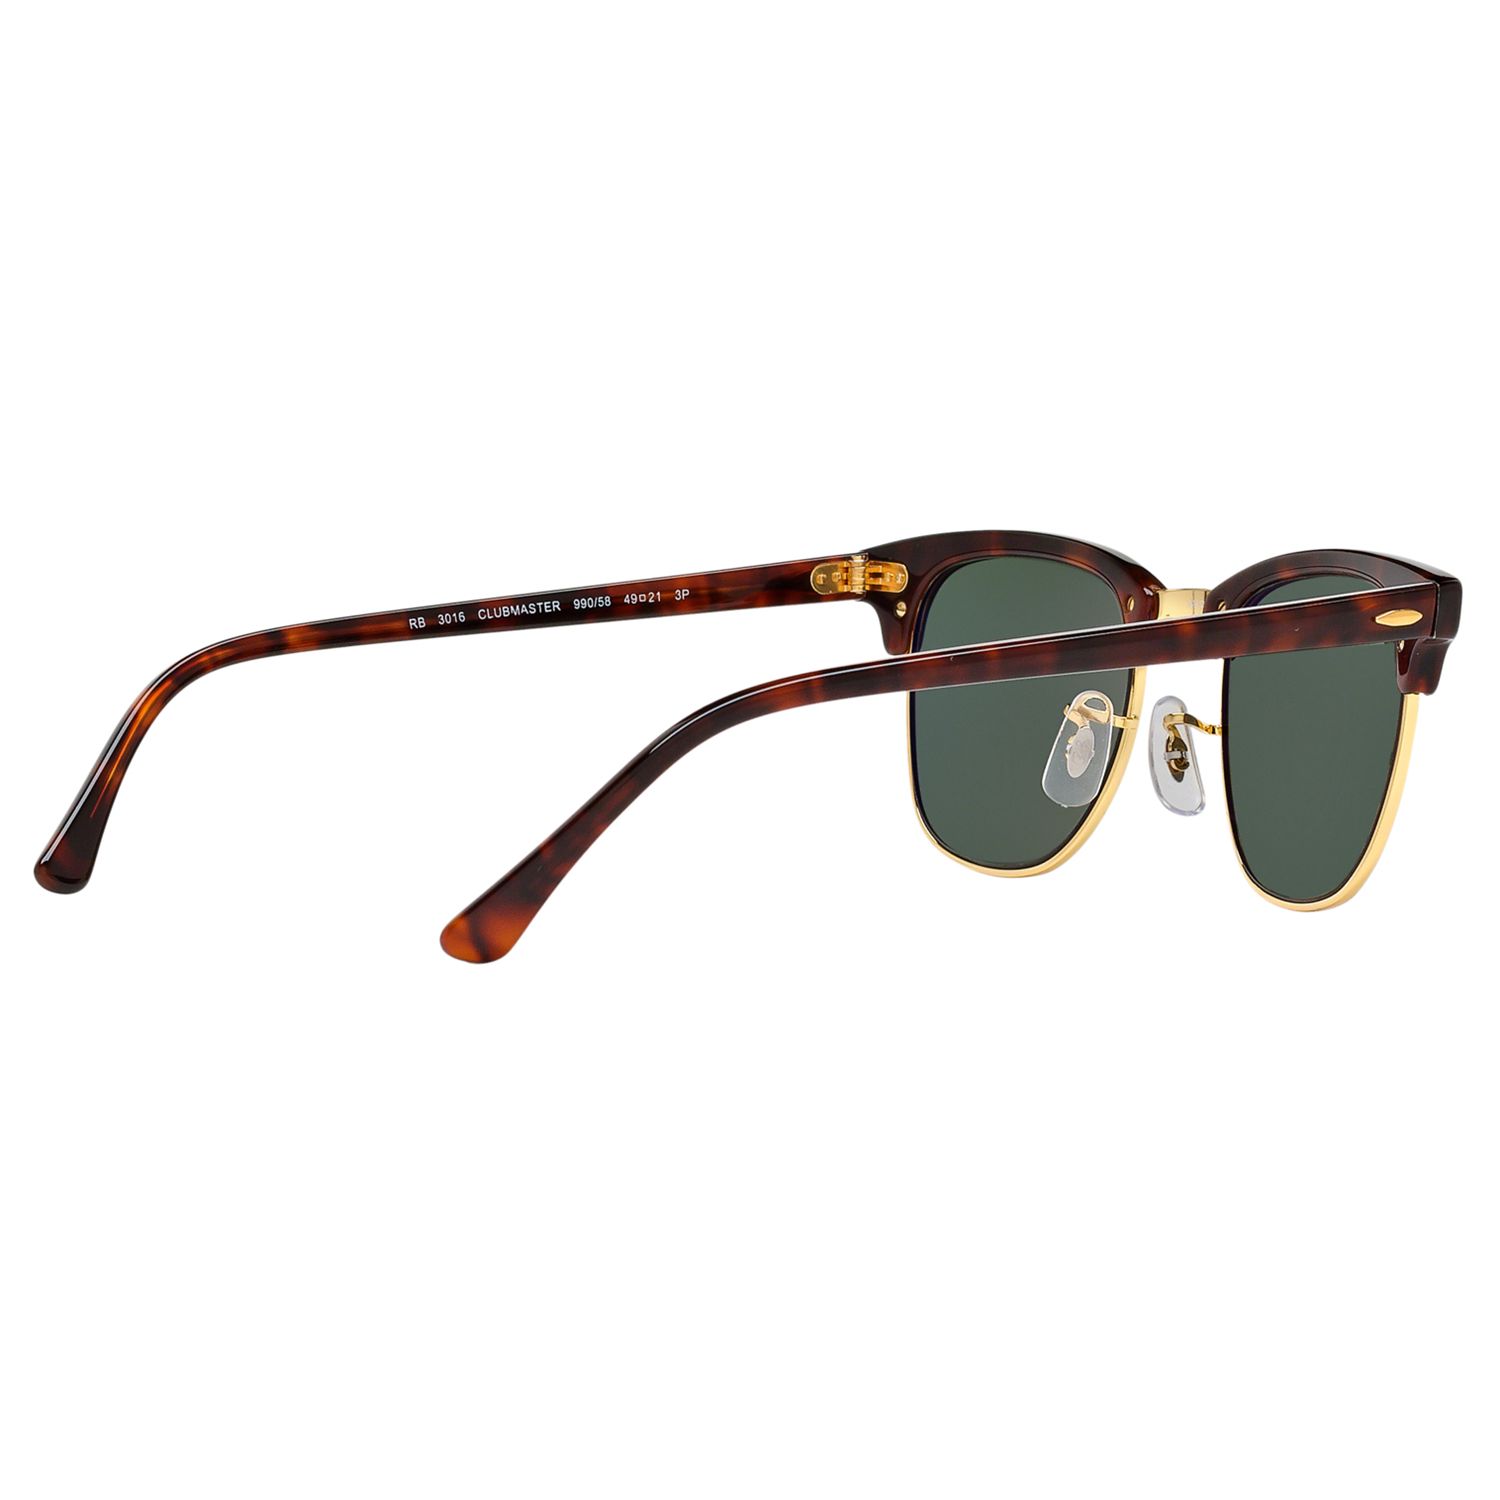 Ray-Ban RB3016 Men's Polarised Clubmaster Sunglasses, Tortoise/Dark Green  at John Lewis & Partners